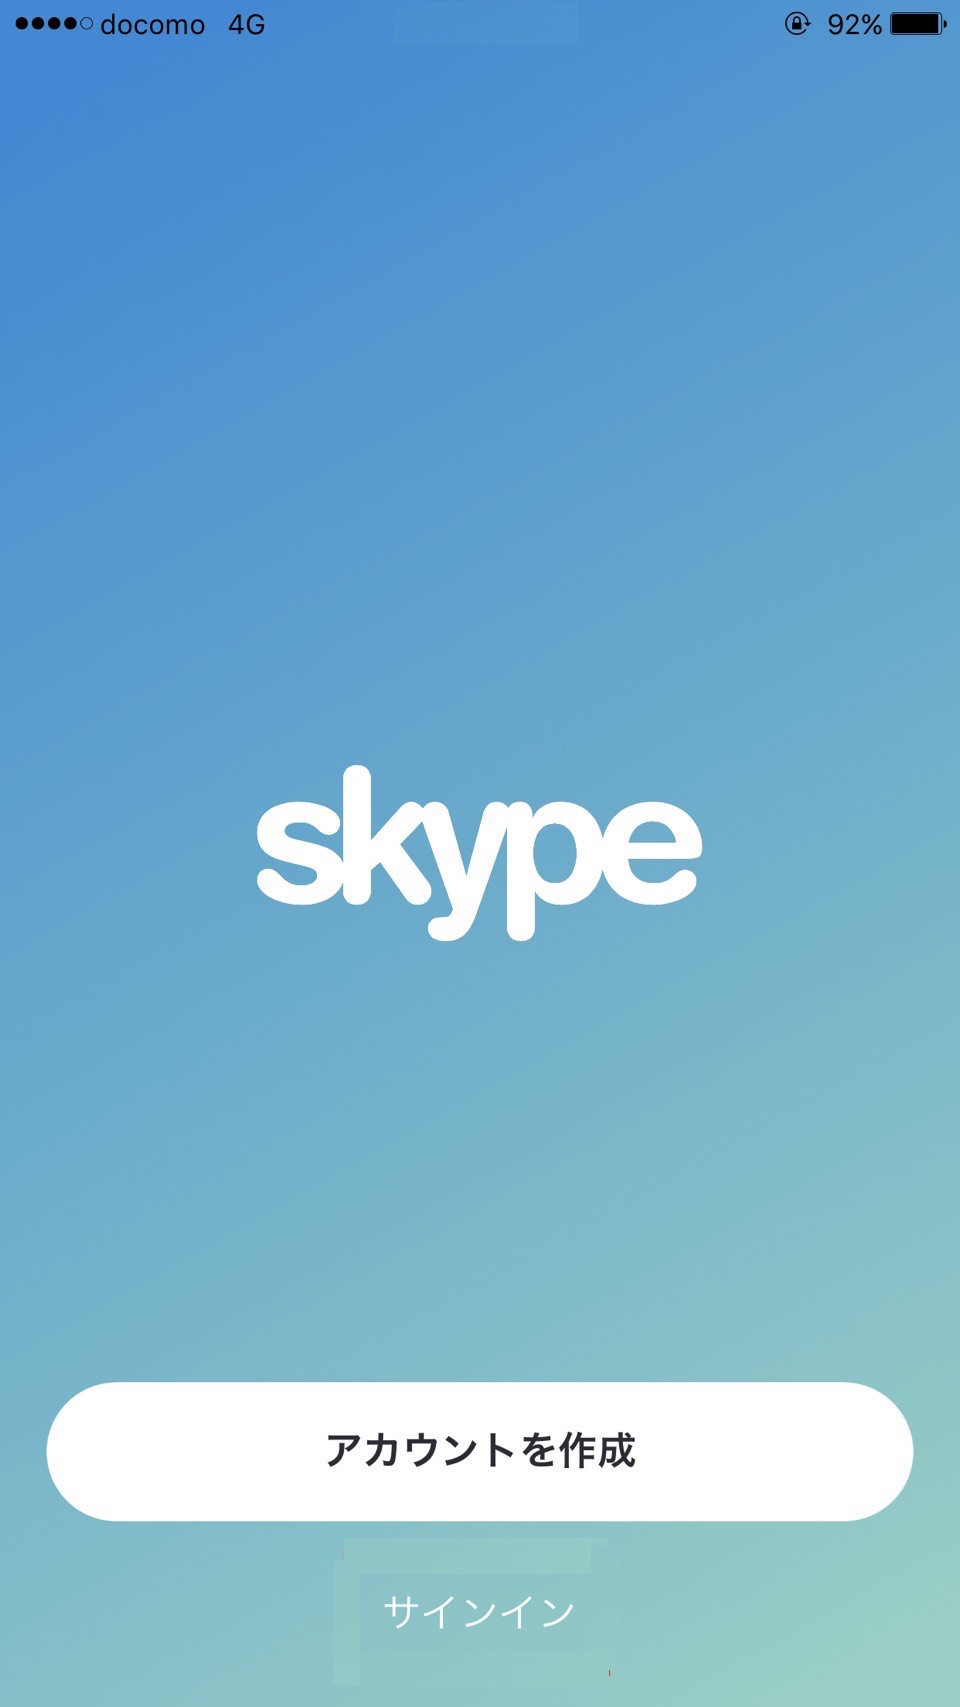 Skype for iPhoneダウンロード完了